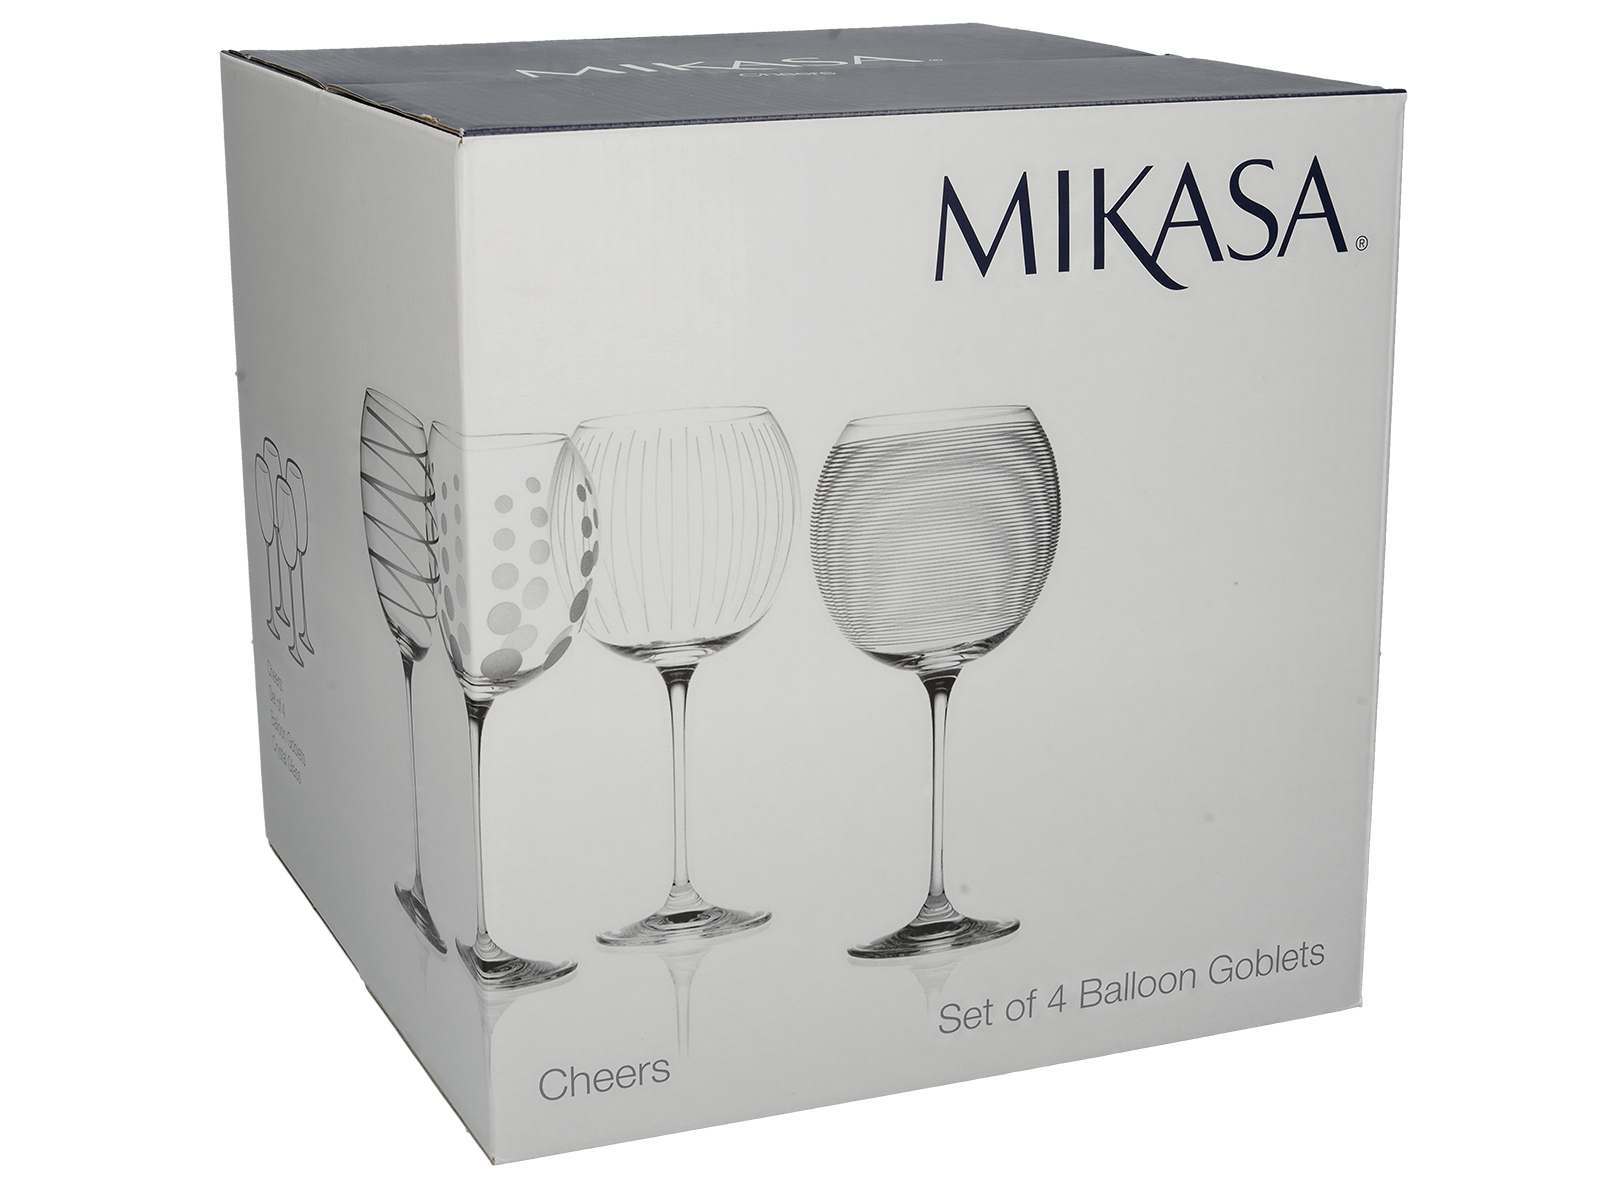 Mikasa Cheers Balloon Goblet Set of 4